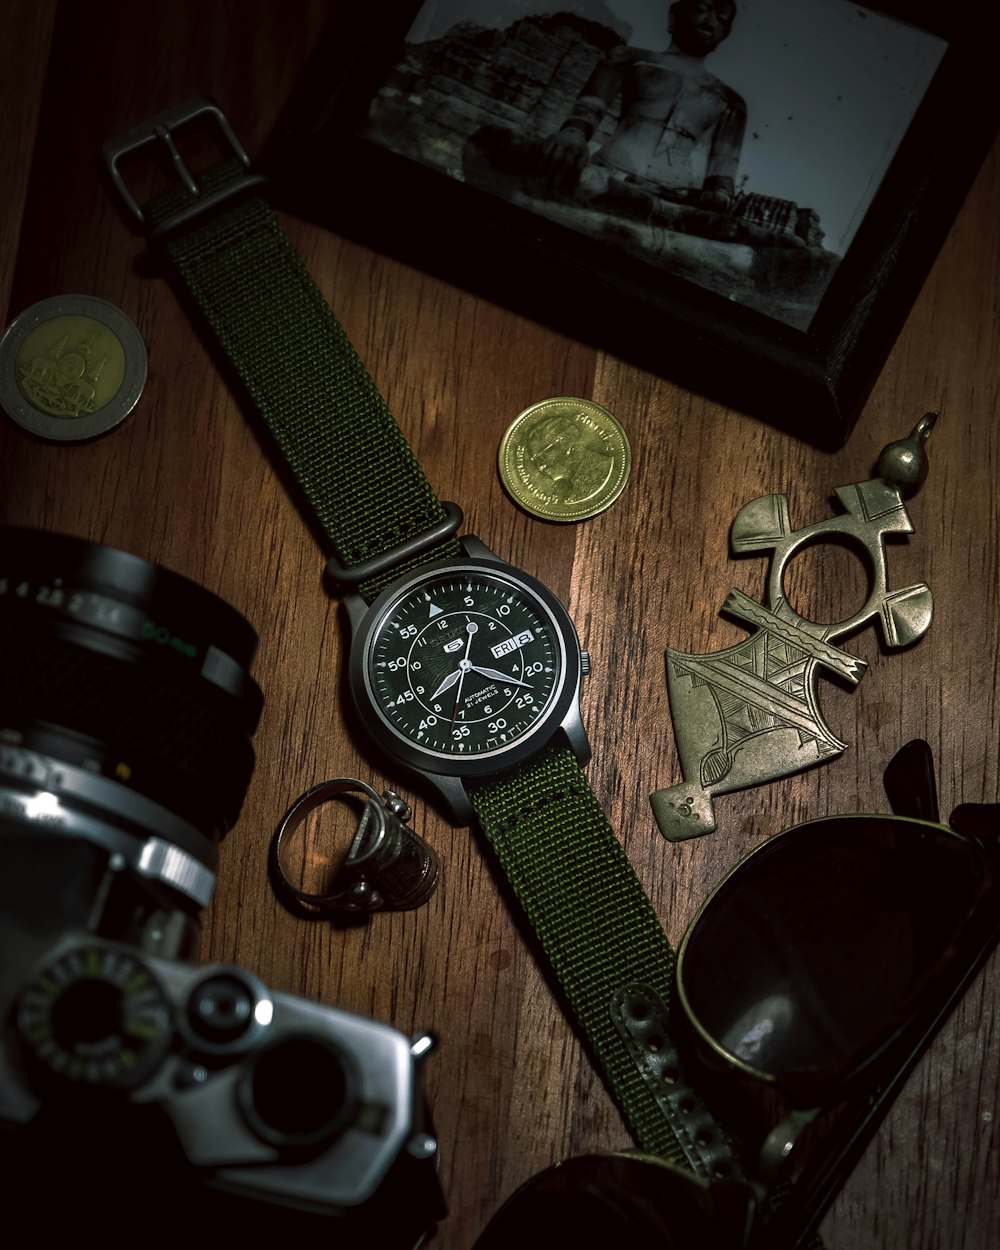 black round analog watch with black leather strap beside silver round analog watch